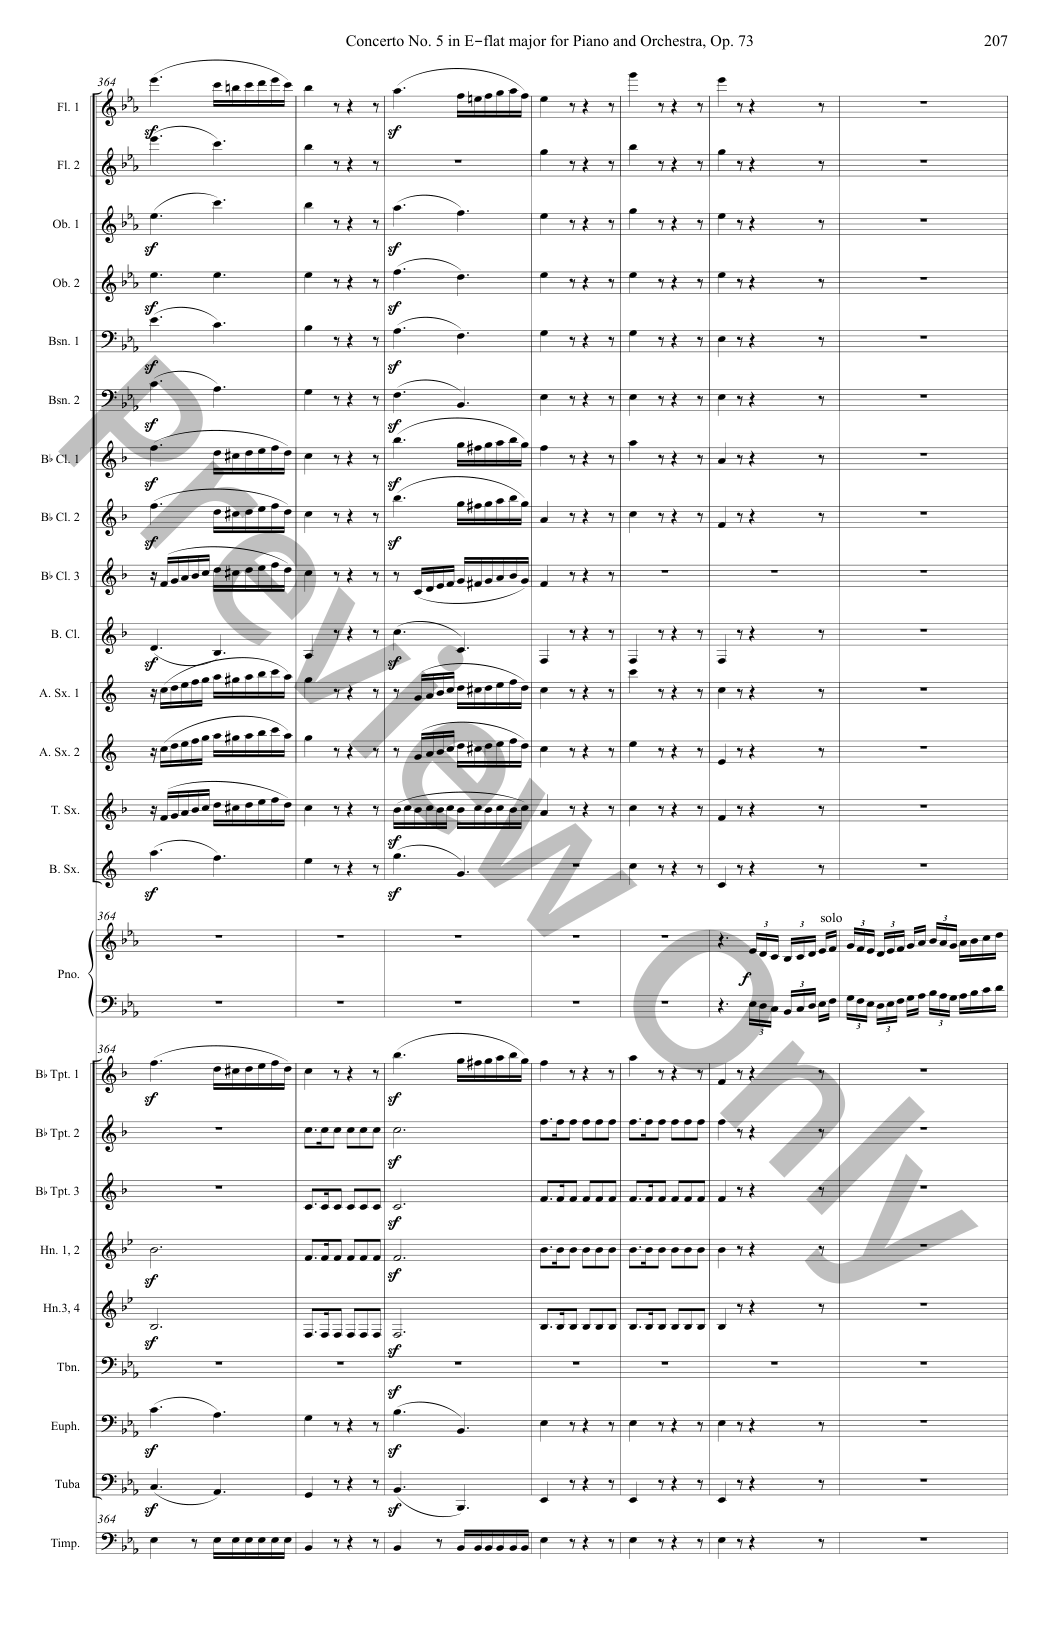 Piano Concerto No. 5 in E-flat major - Op. 73 